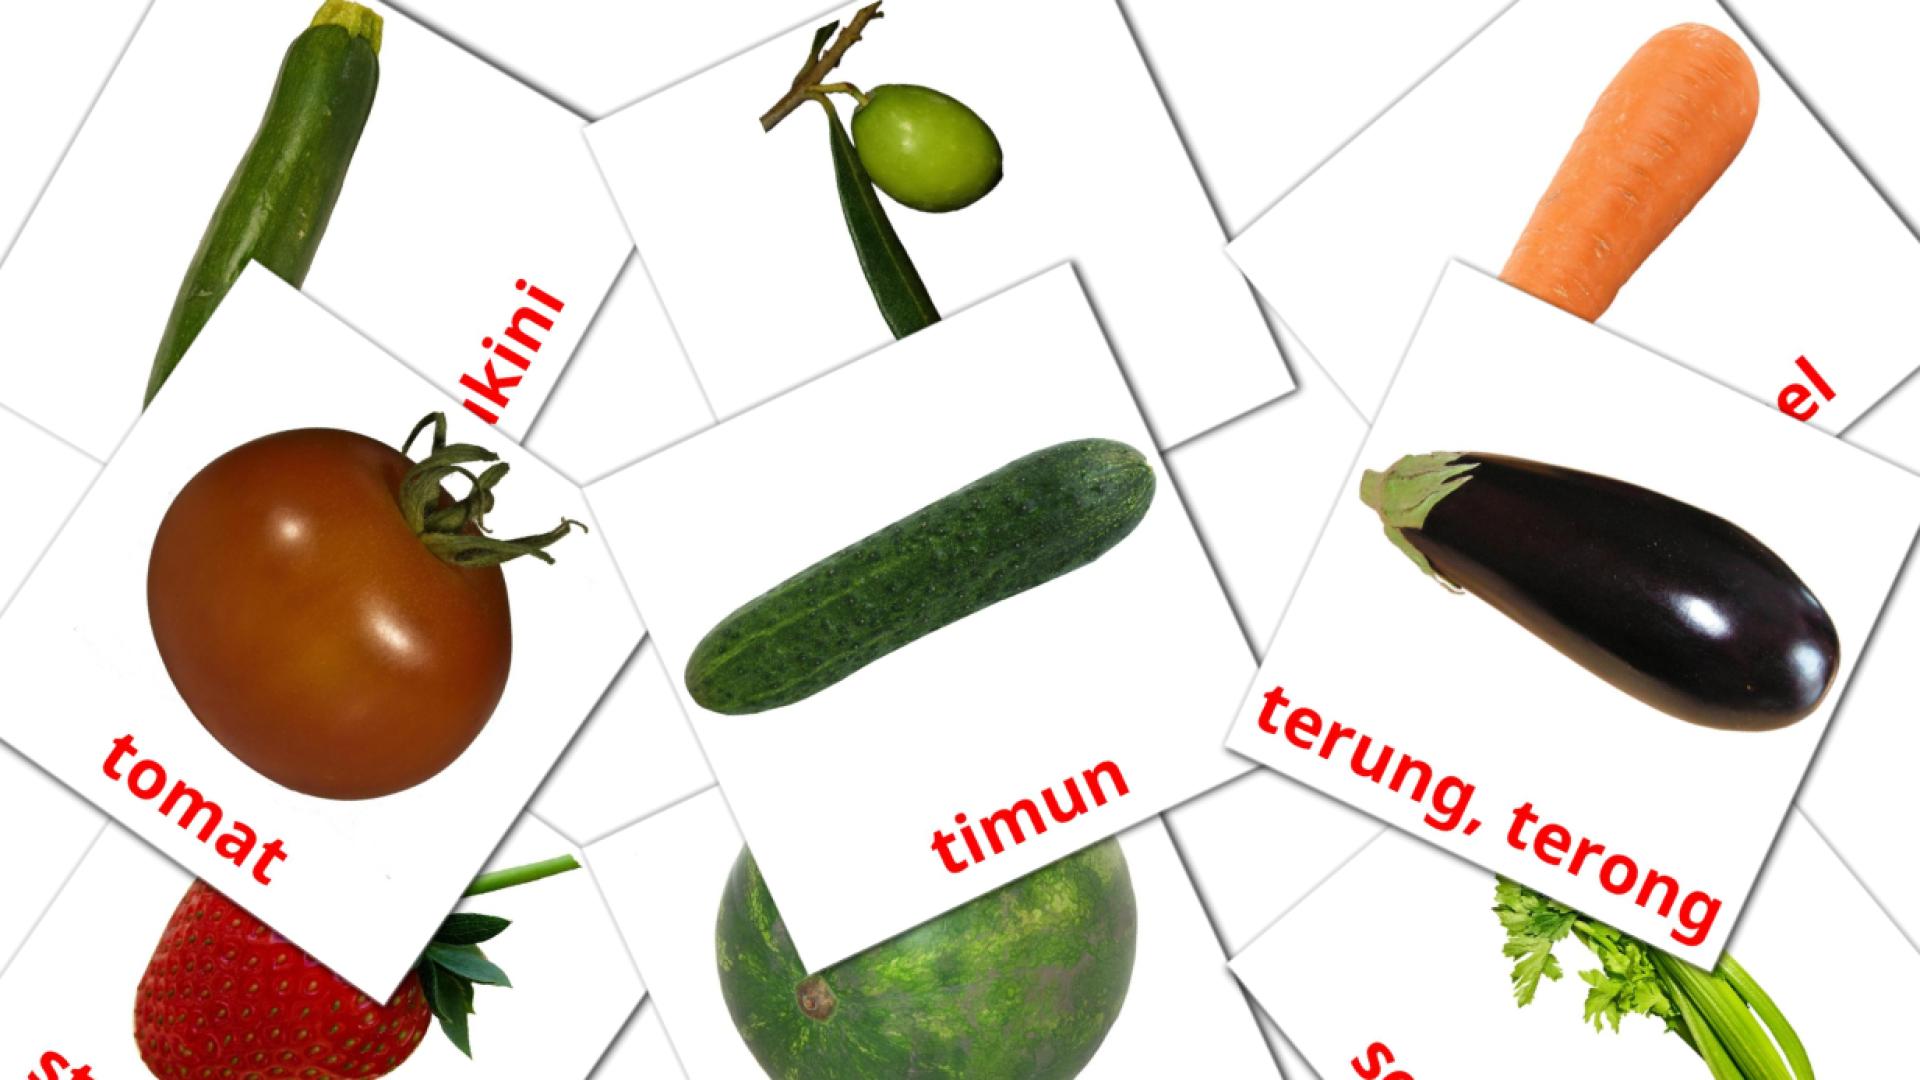 Indonesisch Buah - buahane Vokabelkarteikarten